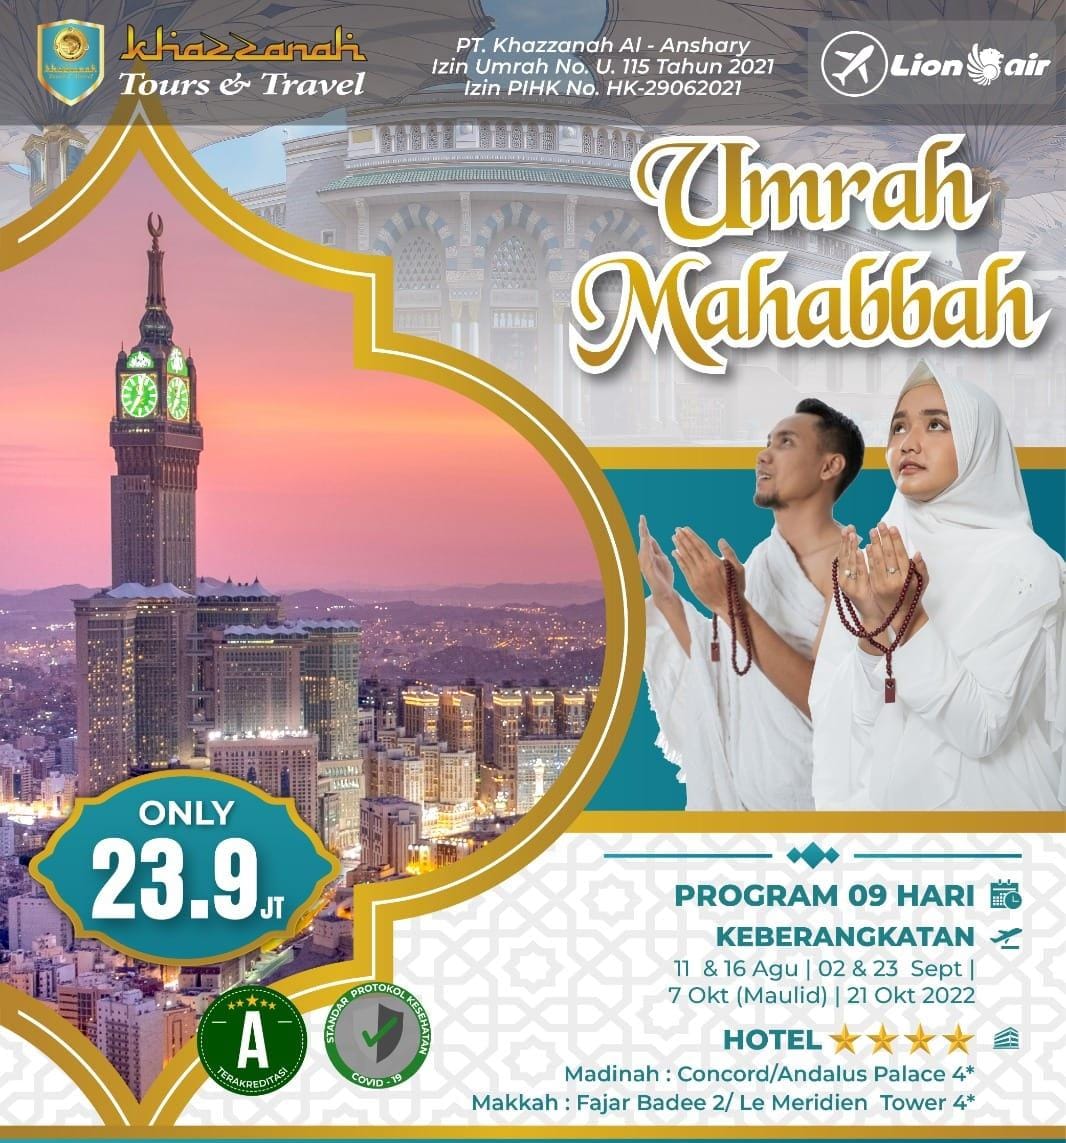 Paket Hajj Plus 2020 Khazzanah Tour